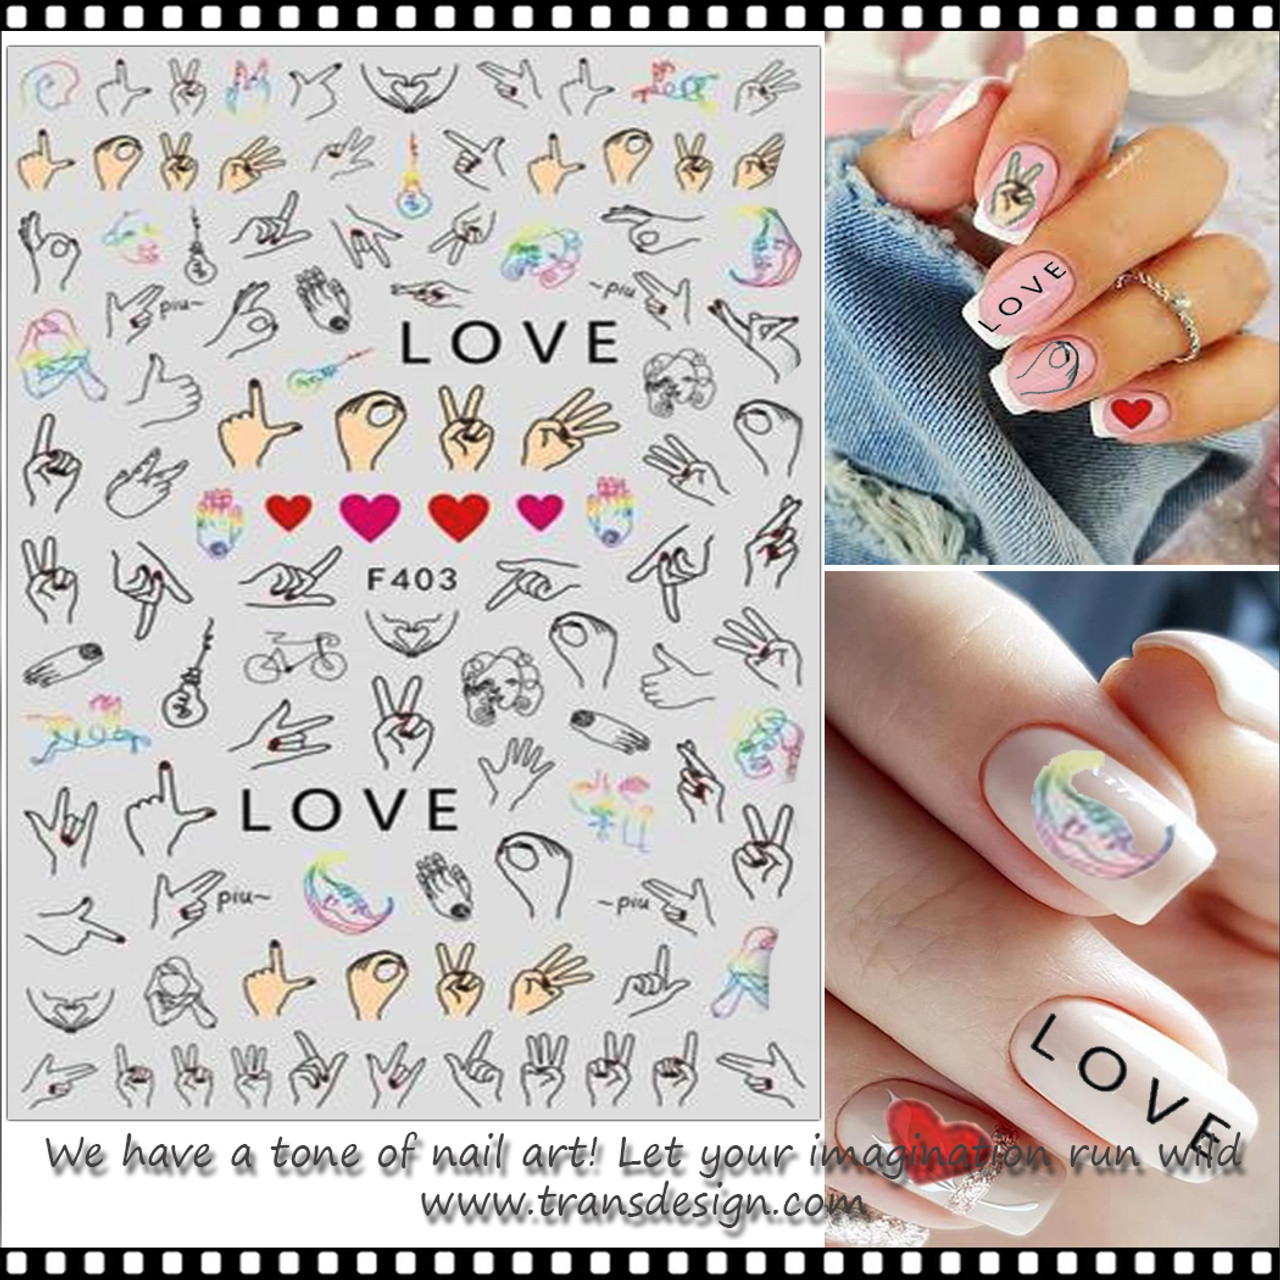 20 Super-Cute Valentine's Day Nail Art Designs | CafeMom.com